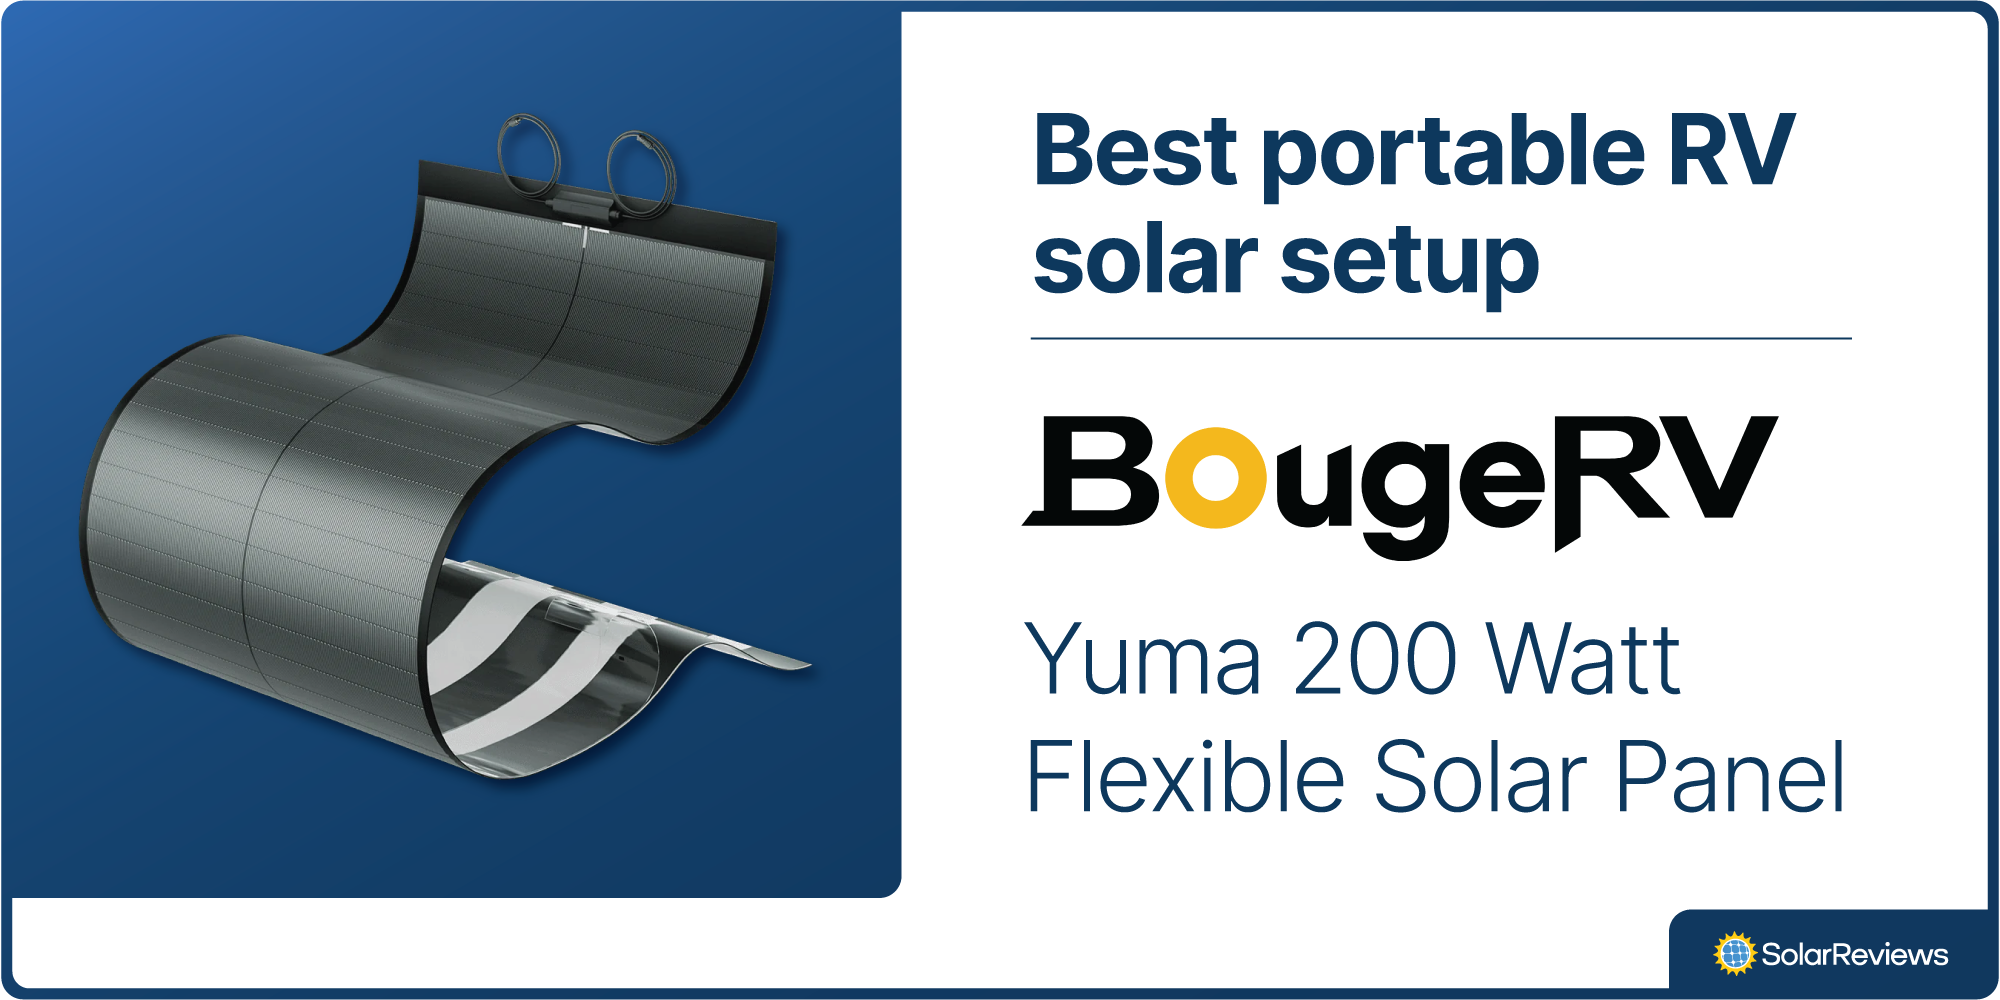 SolarReviews votes the Yuma 200 Watt Flexible Solar Panel from BougeRV the best portable RV solar setup